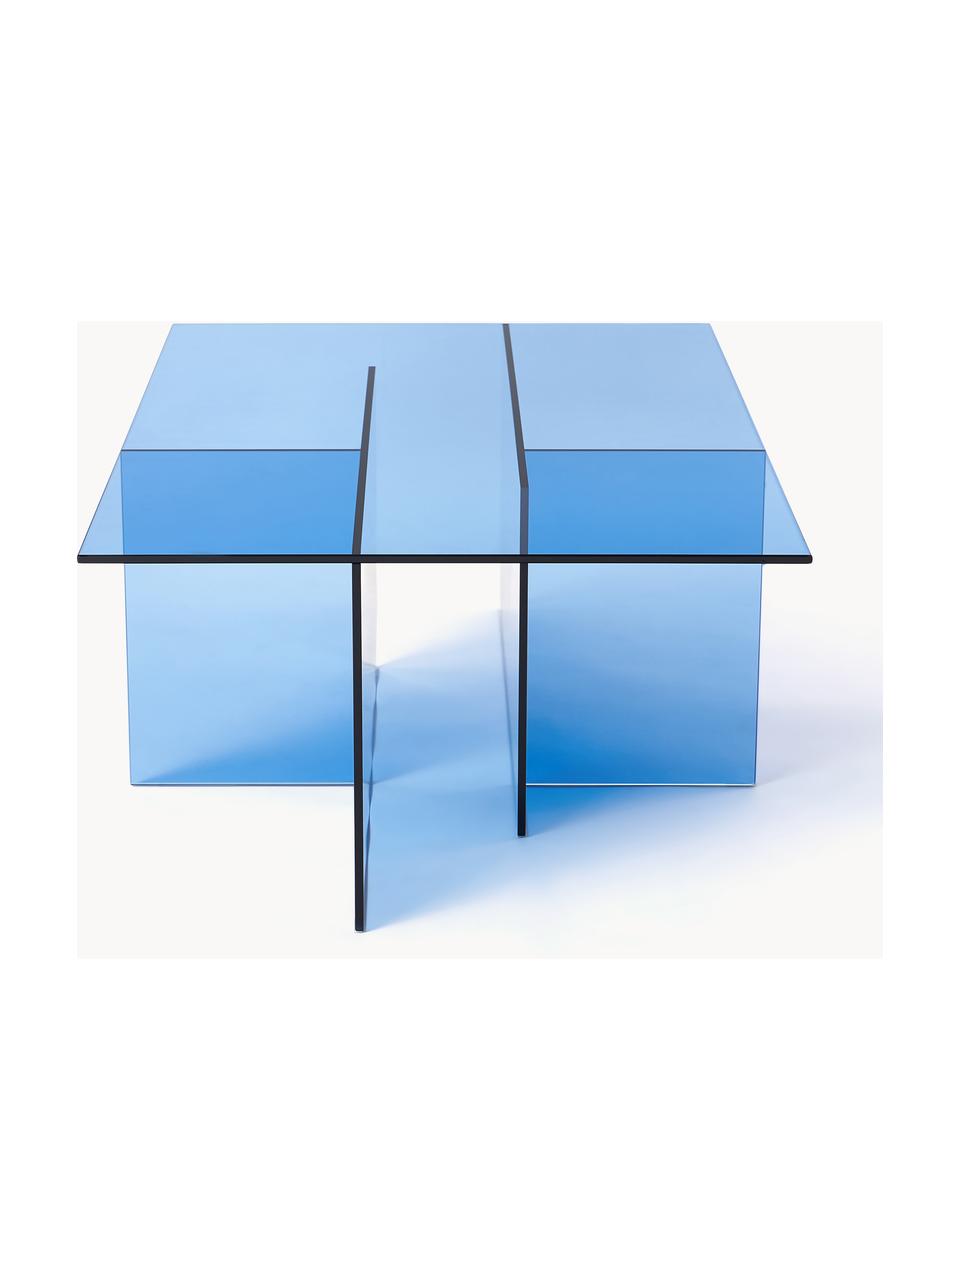 Glas-Couchtisch Anouk, Glas, Blau, transparent, B 102 x T 63 cm